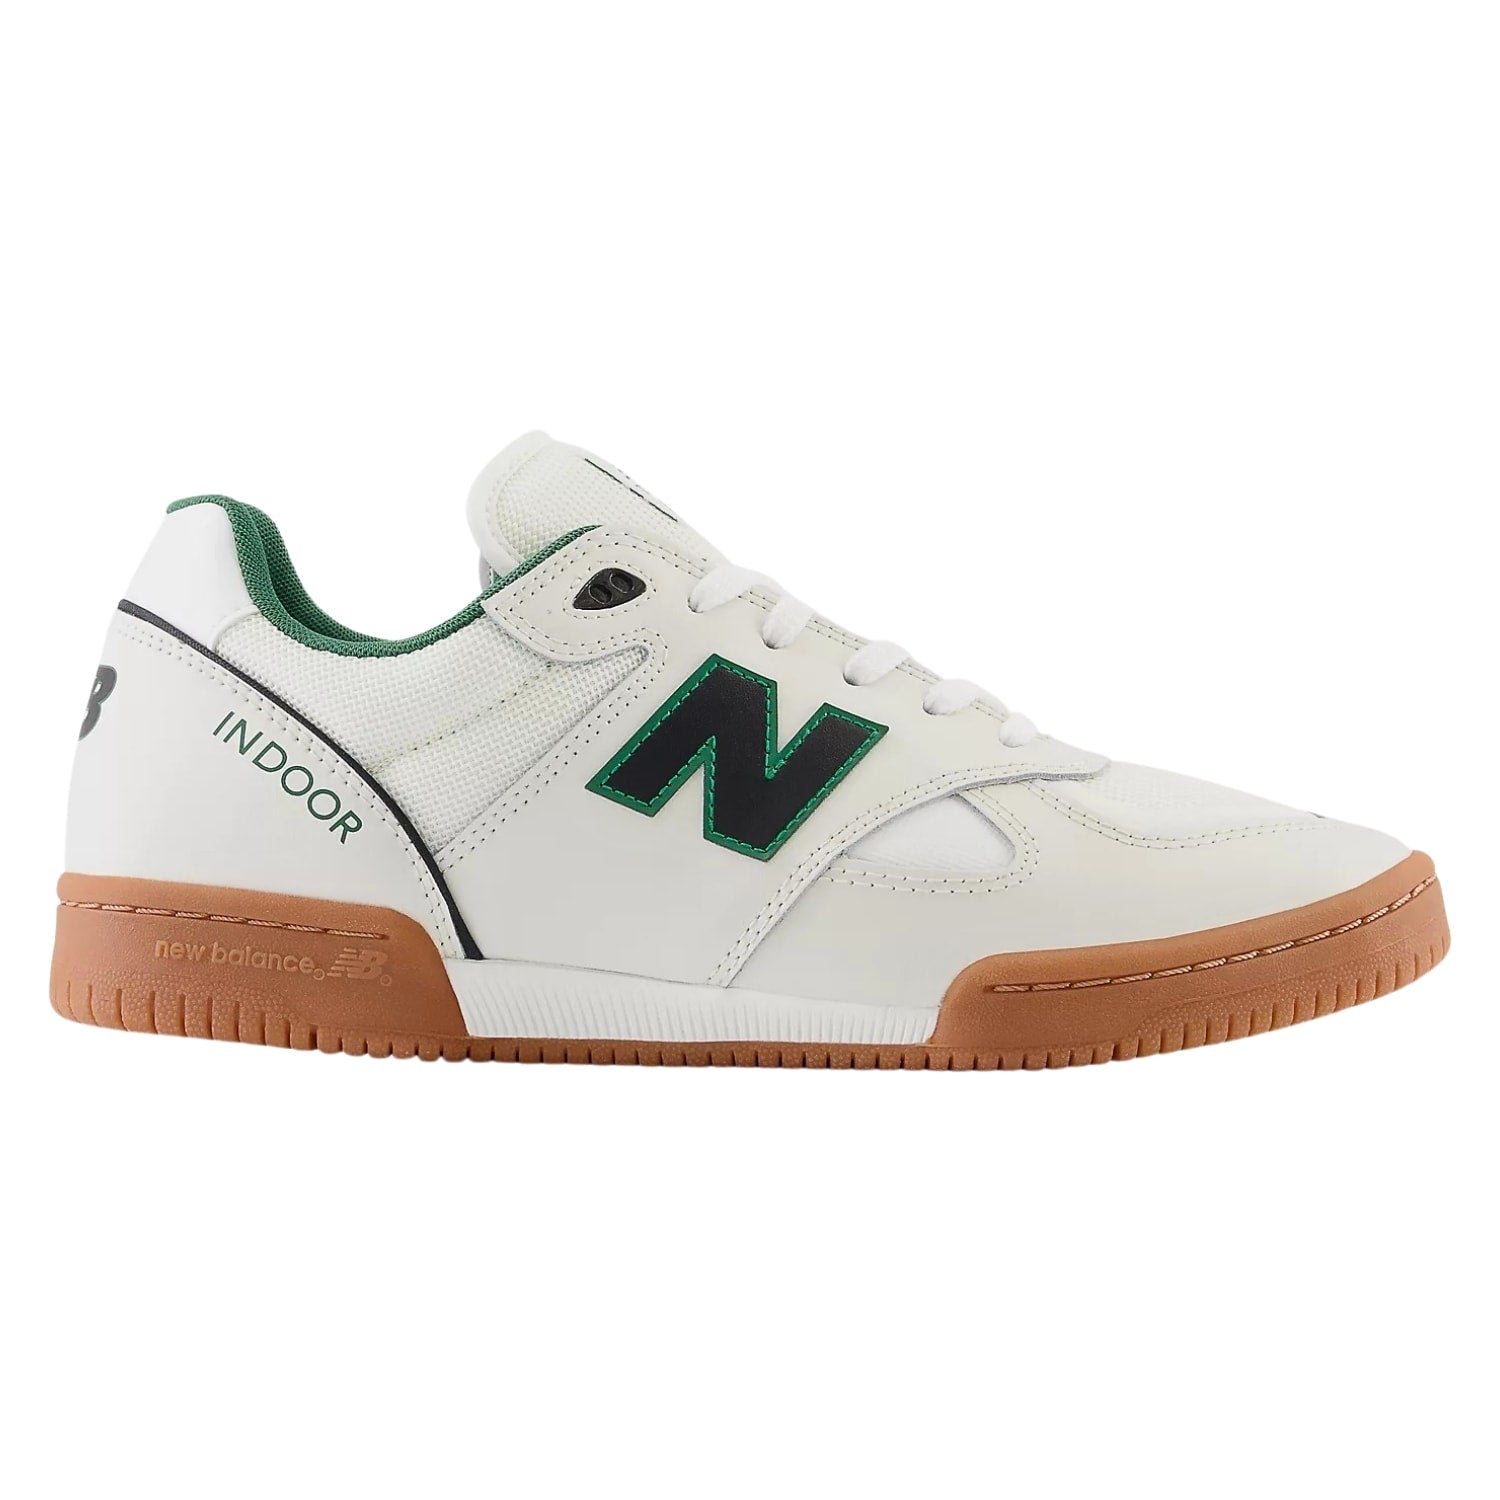 New Balance Numeric NM600 Tom Knox Skate Shoes - White/Green - Mens Skate Shoes by New Balance Numeric